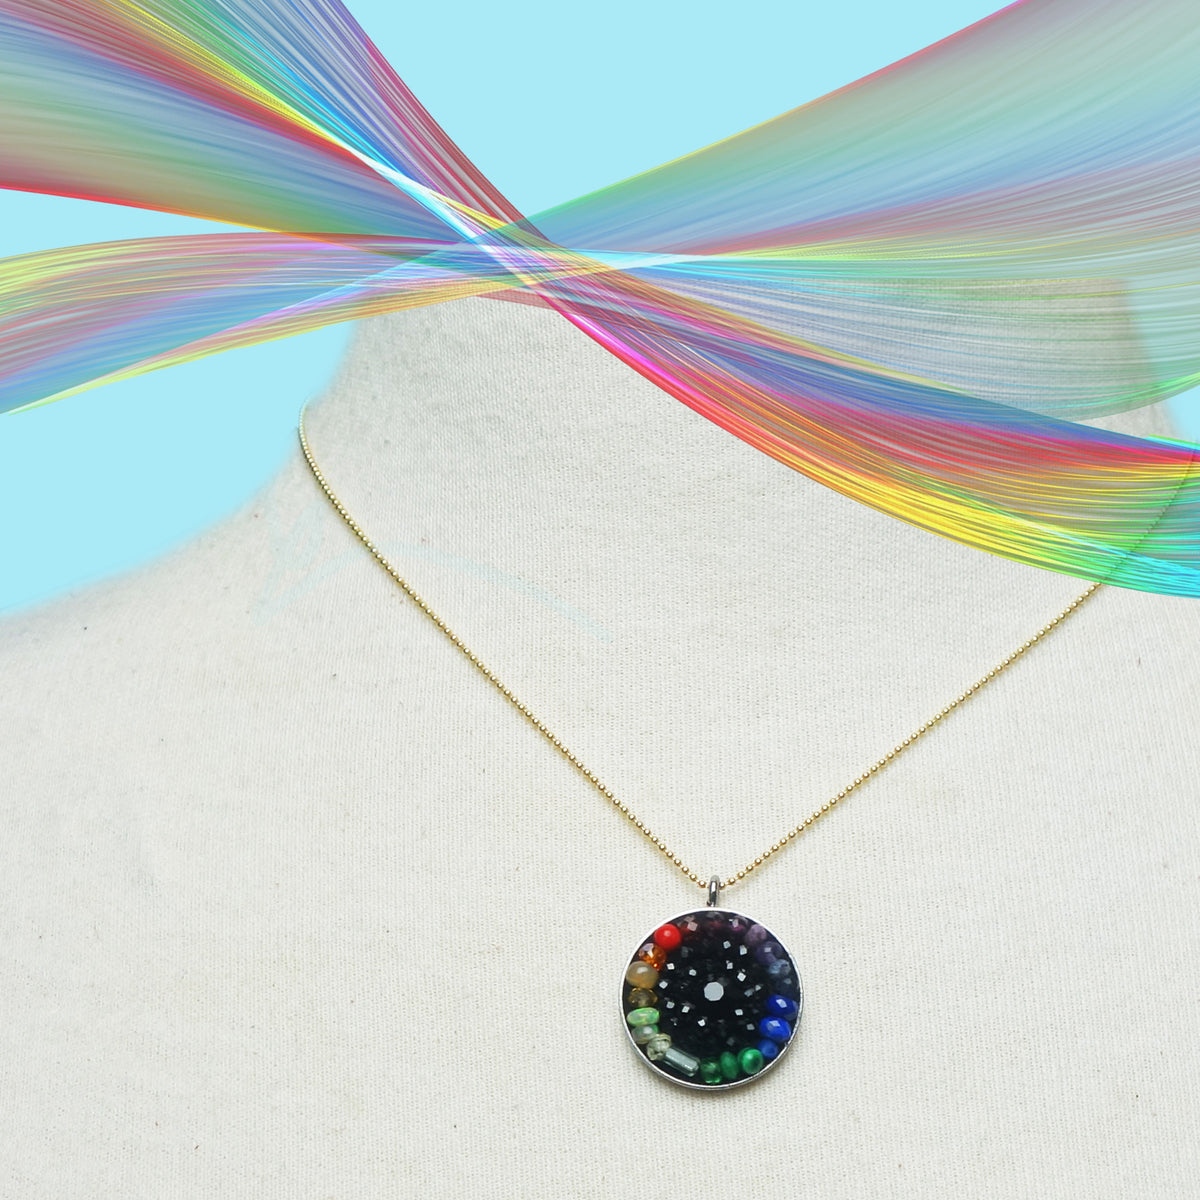 Sapphire, tourmaline, opal: mosaic rainbow pendant on gold